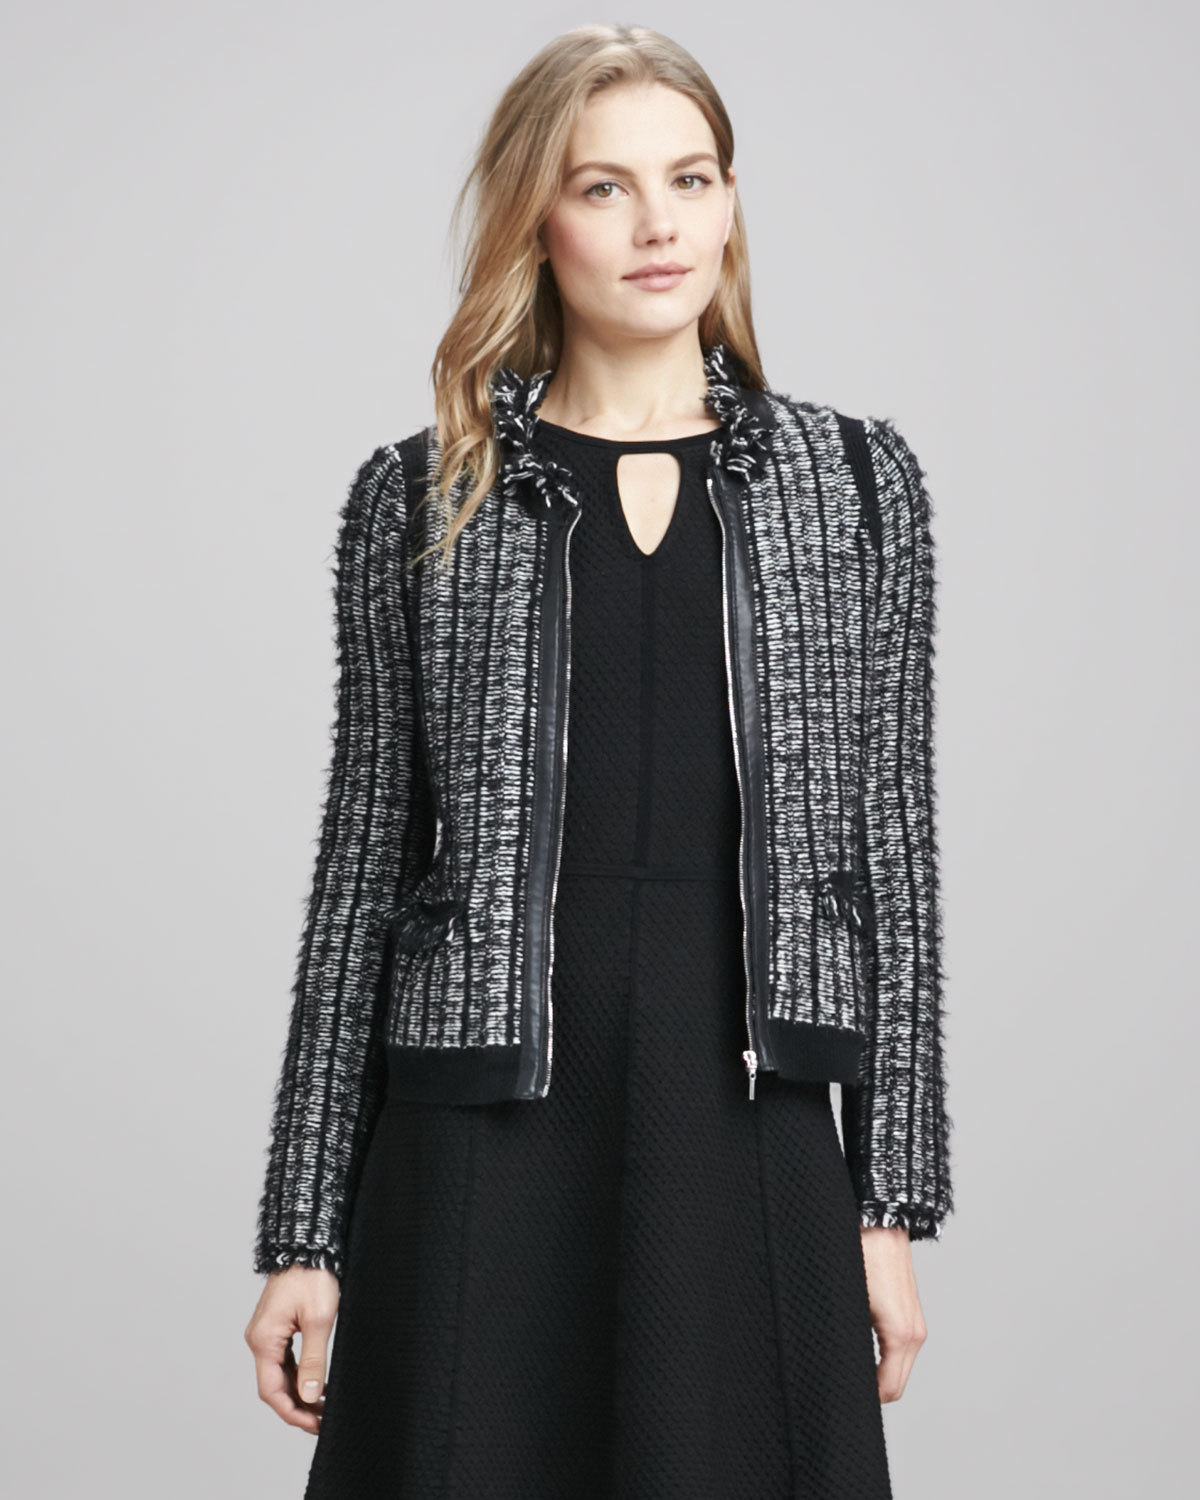 Lyst - Rebecca taylor Leathertrim Tweed Jacket in Black